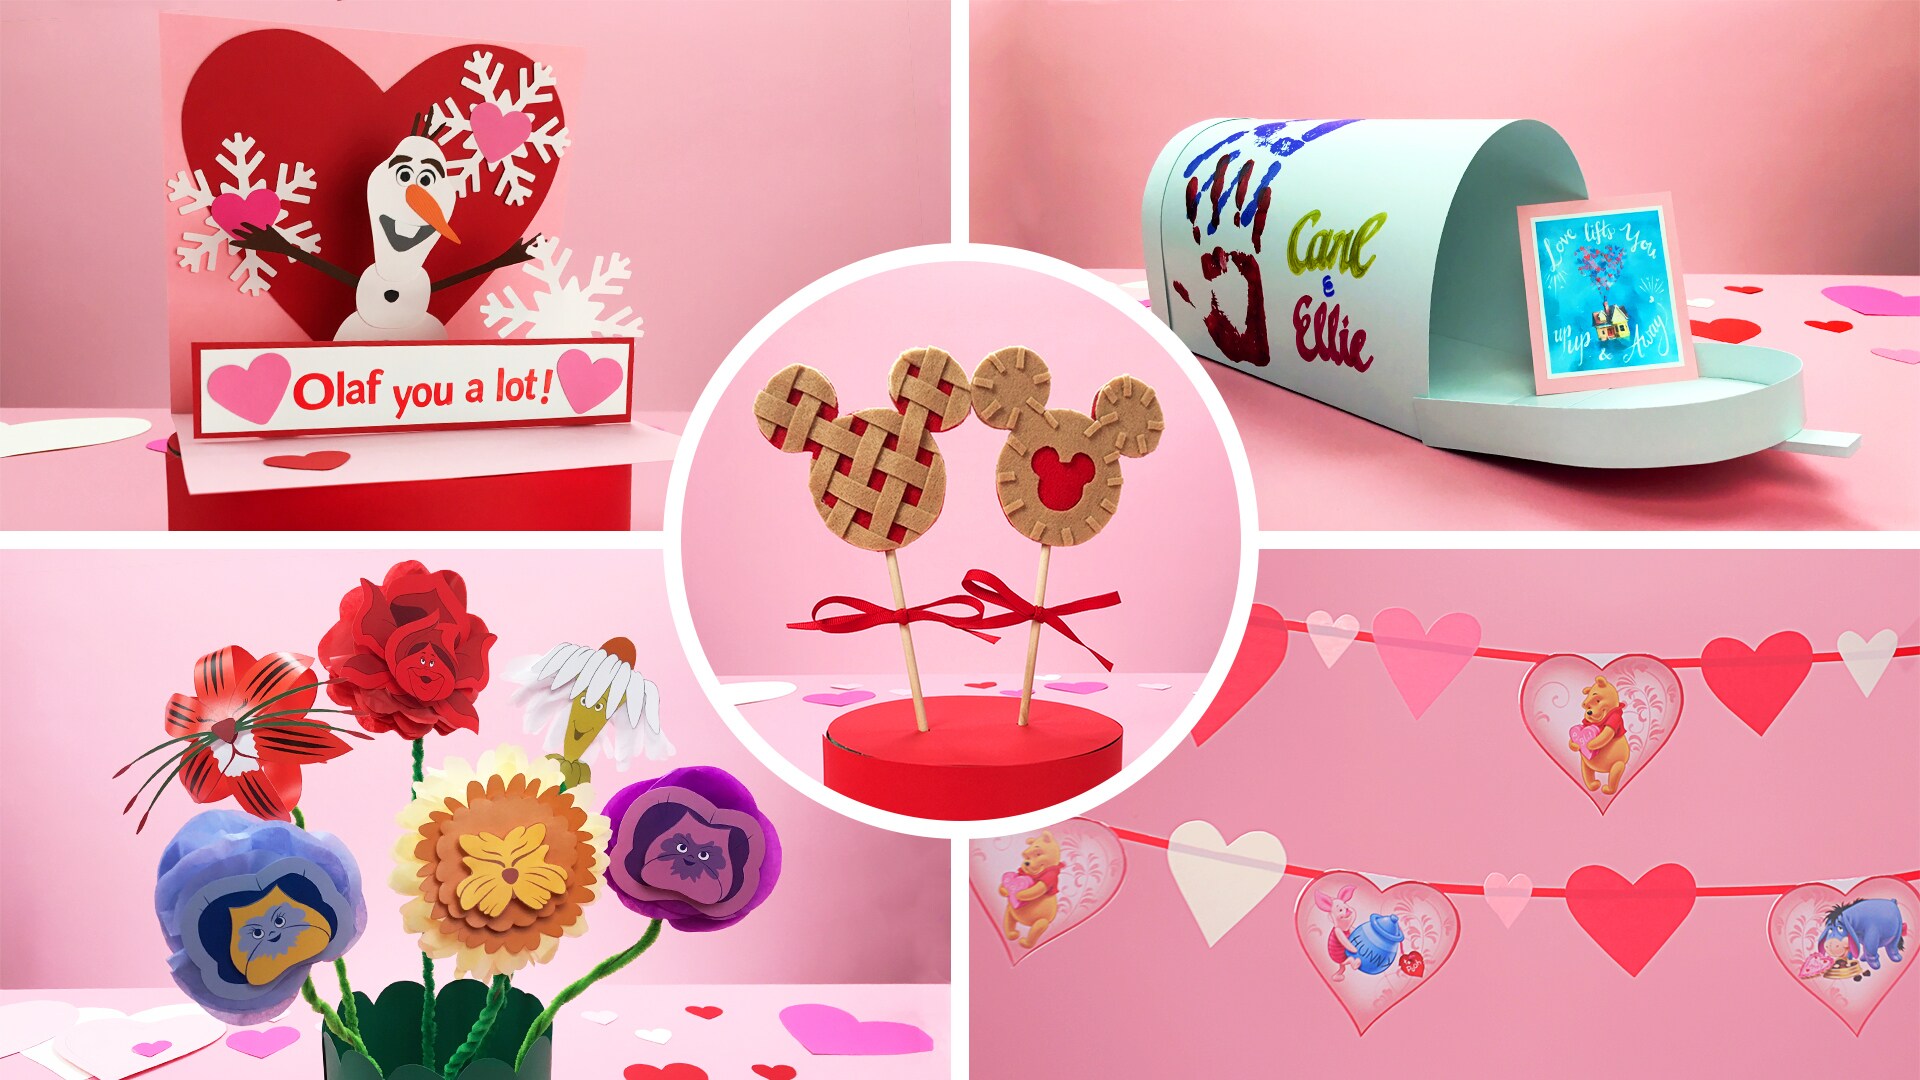 5 Easy Disney Crafts for Kids for Valentine’s Day | Disney DIY by Disney Family